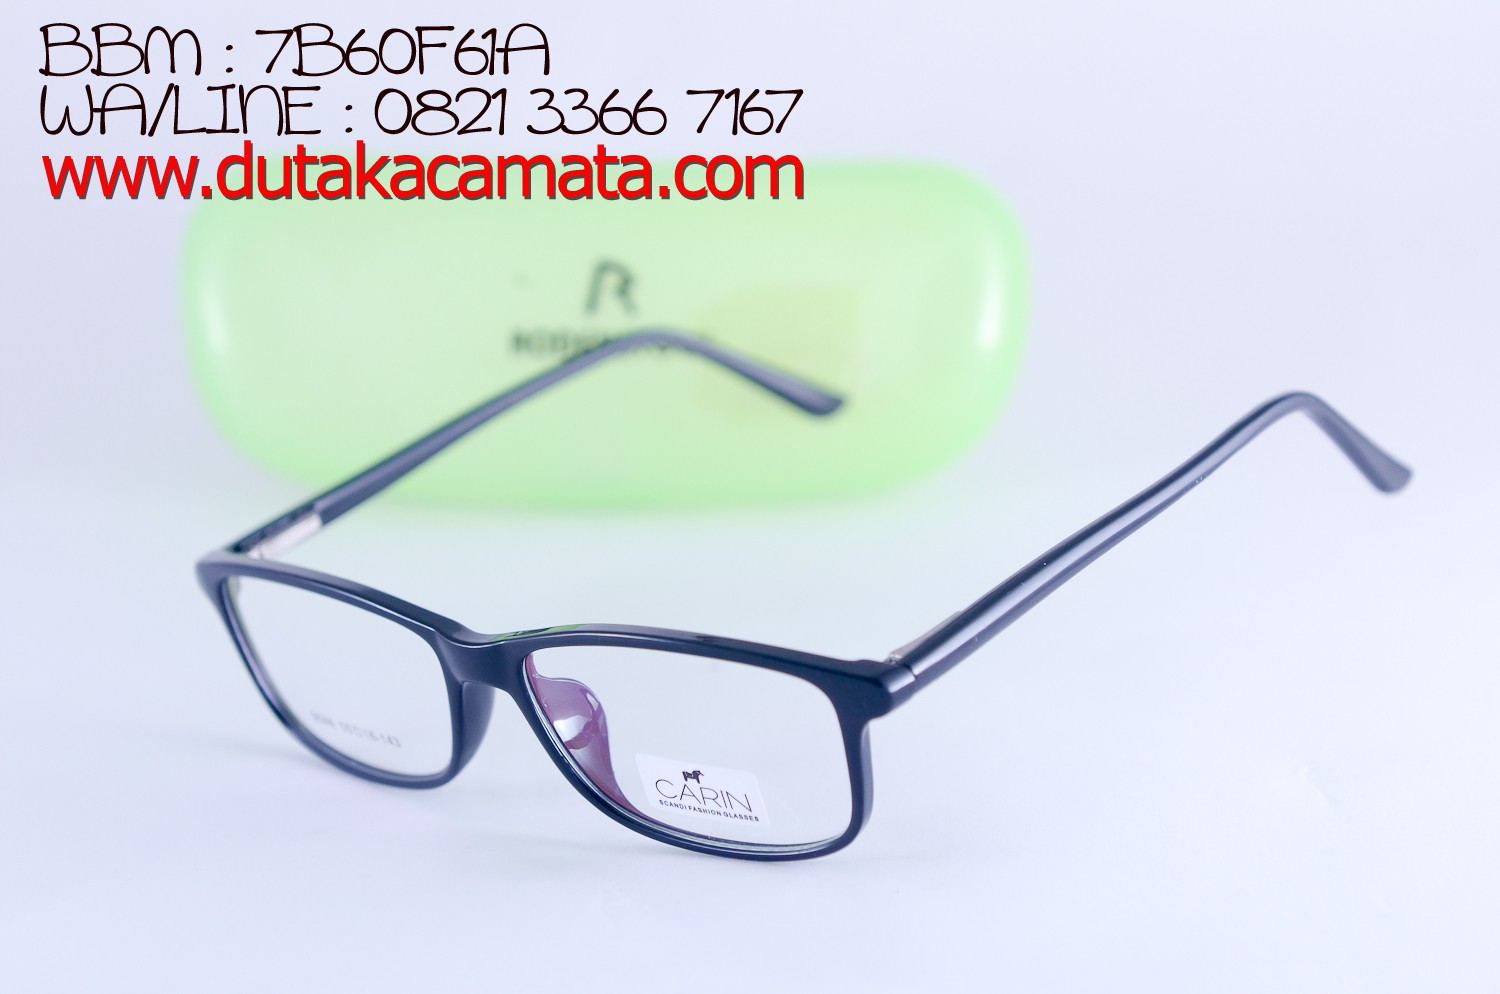 Carin 5 Toko jual frame kacamata  minus  murah online dari 